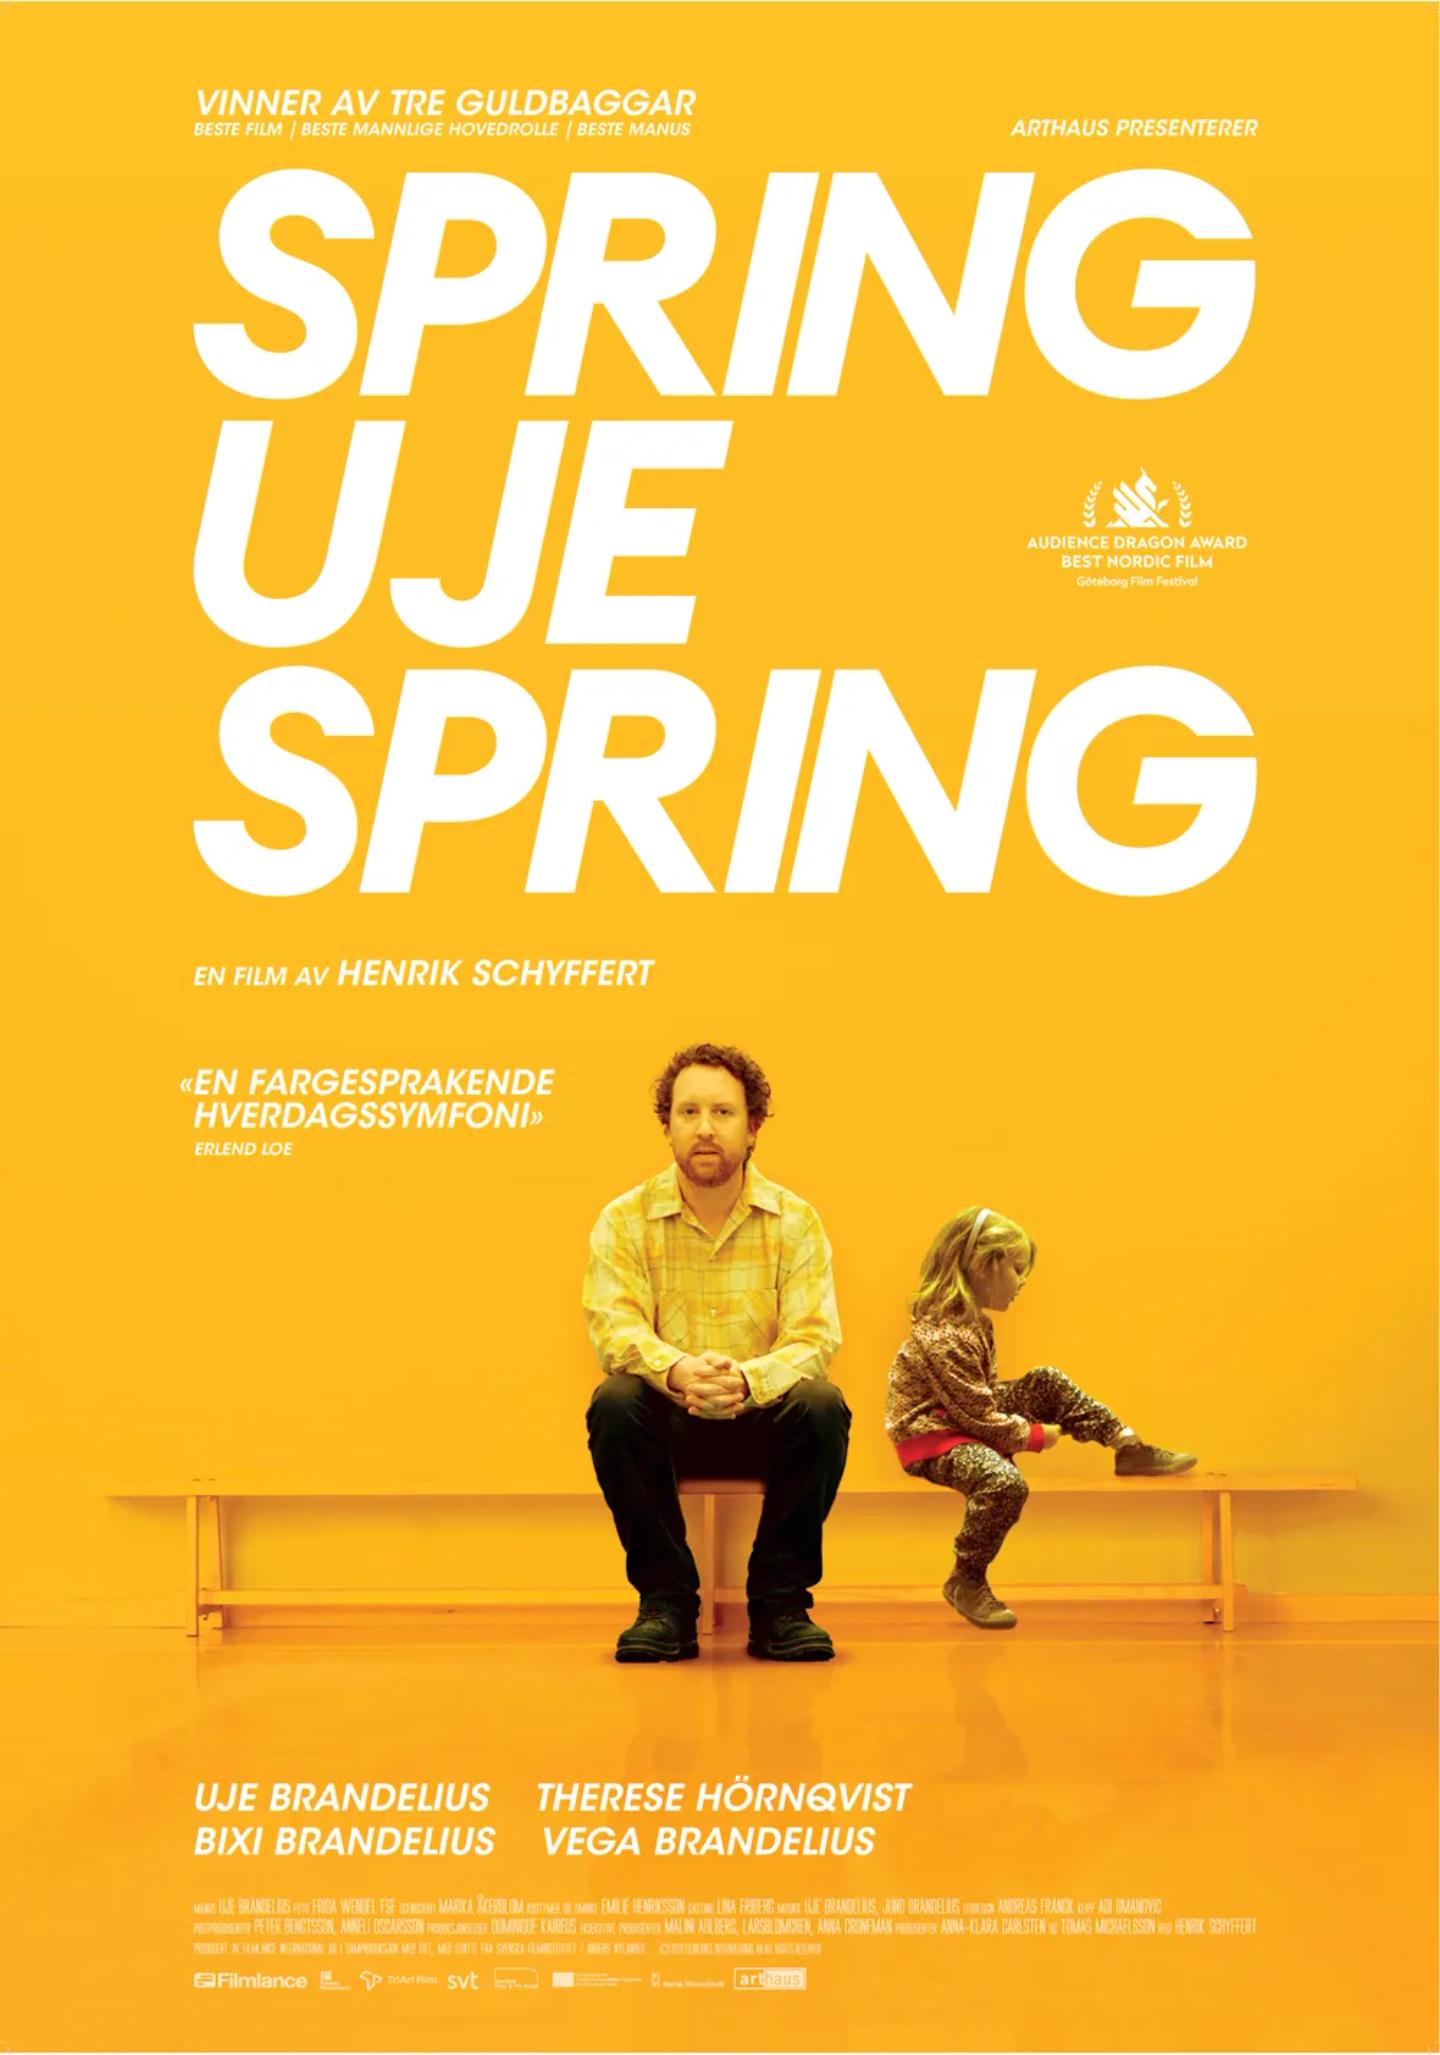 Plakat for 'Spring Uje spring'